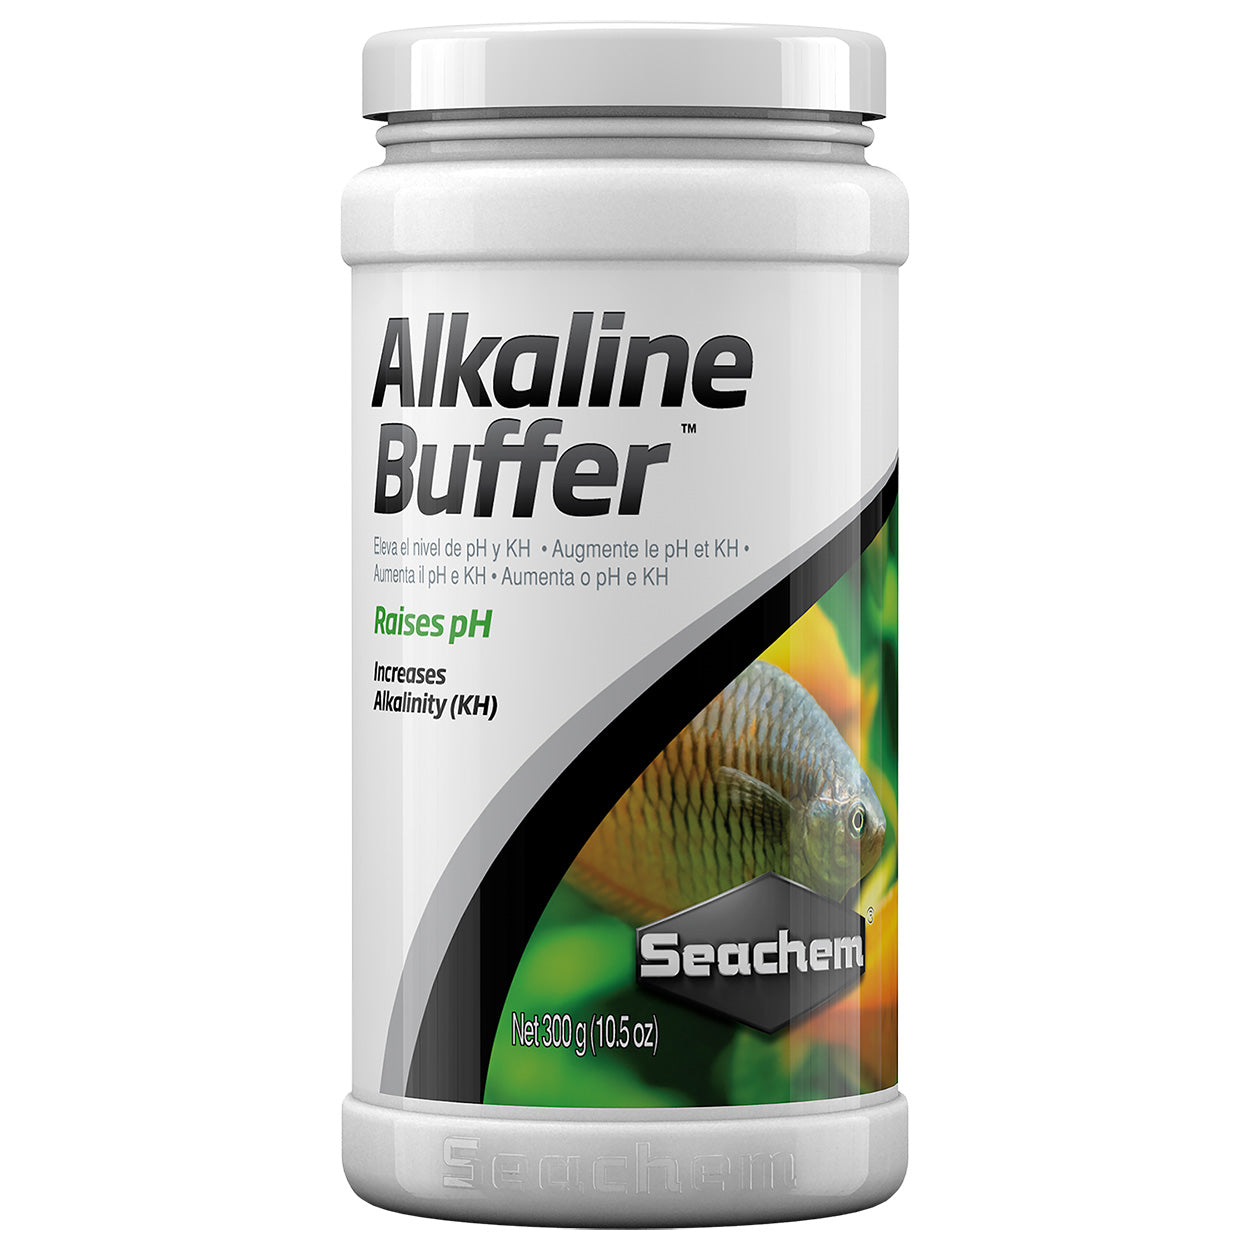 Alkaline Buffer, Seachem